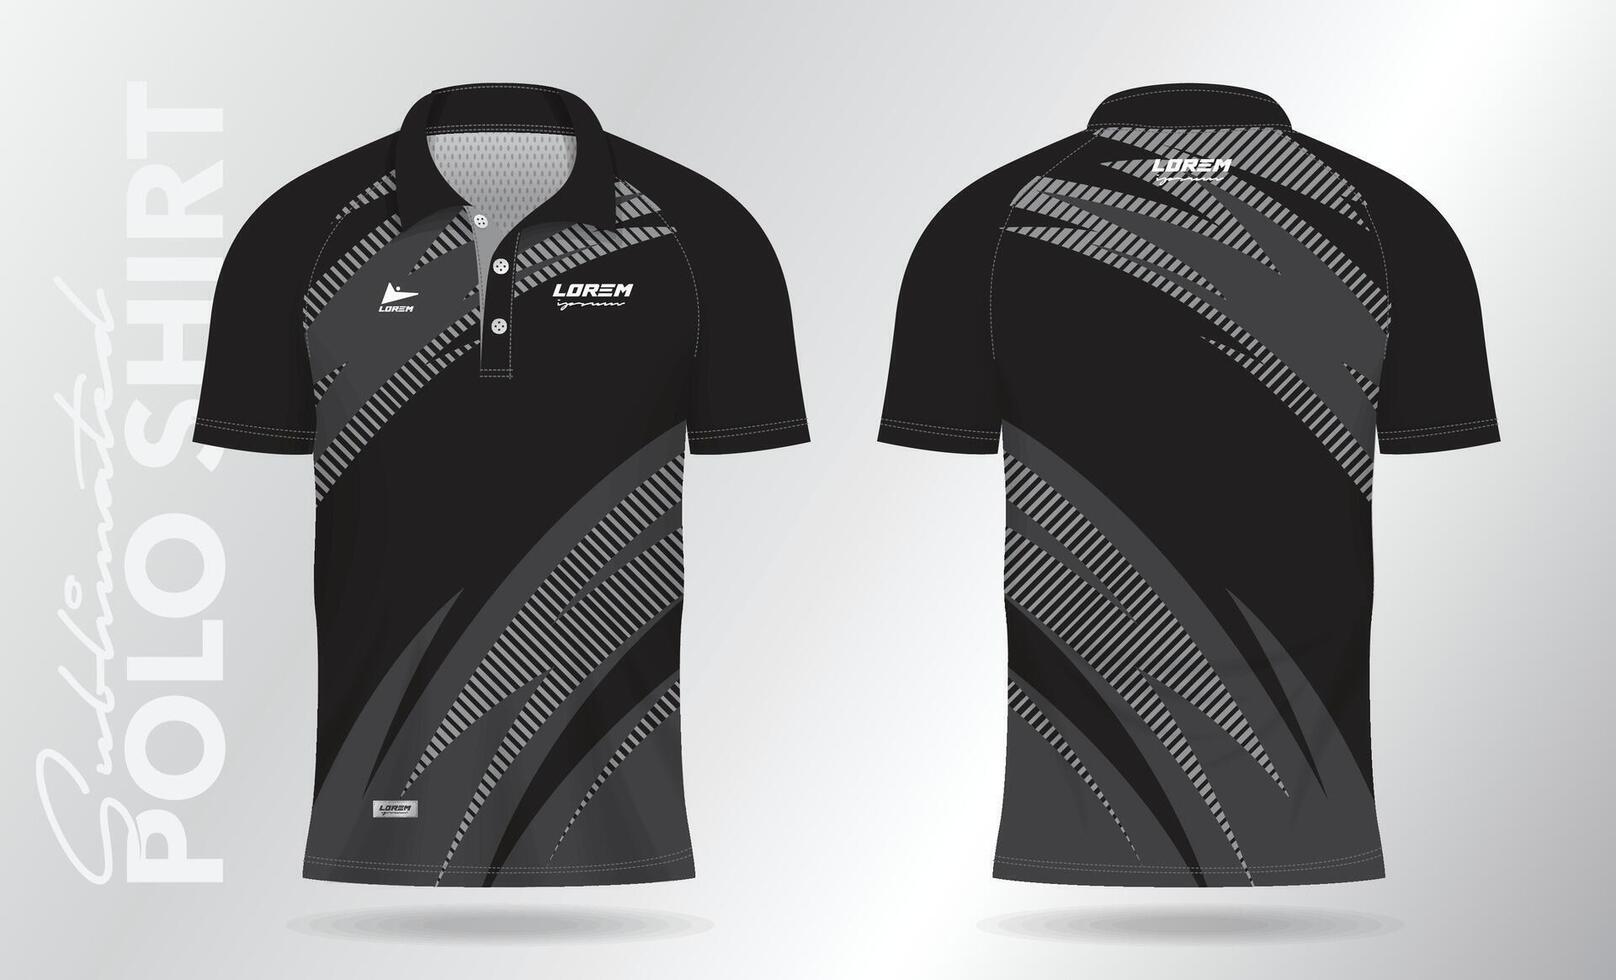 zwart polo Jersey overhemd mockup sjabloon ontwerp voor badminton, tennis, voetbal, Amerikaans voetbal of sport uniform in voorkant visie en terug visie. vector